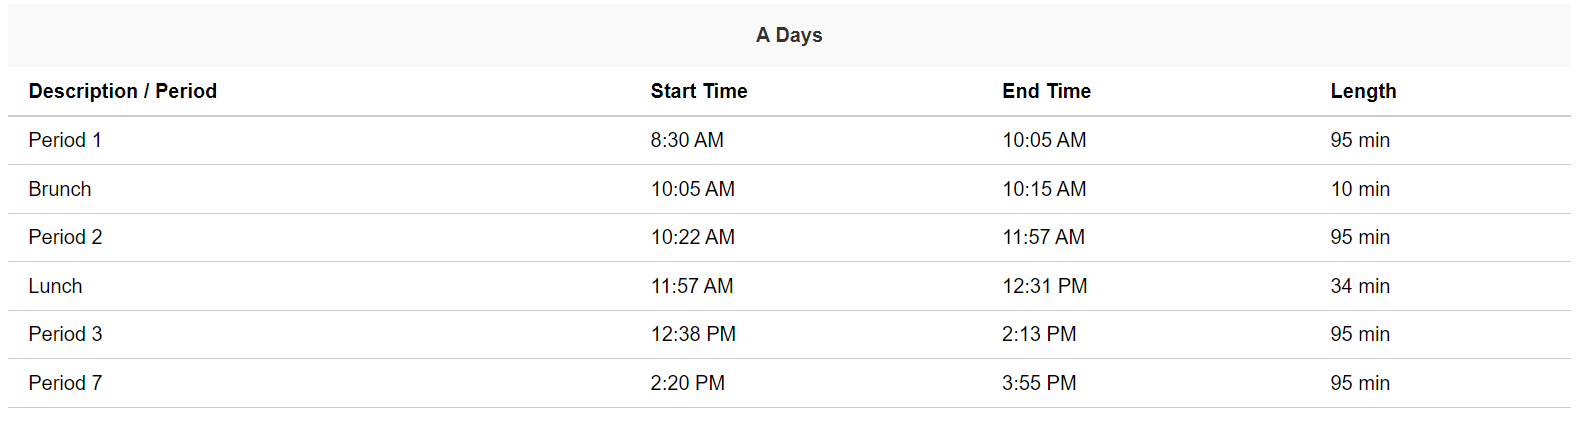 A-day schedule